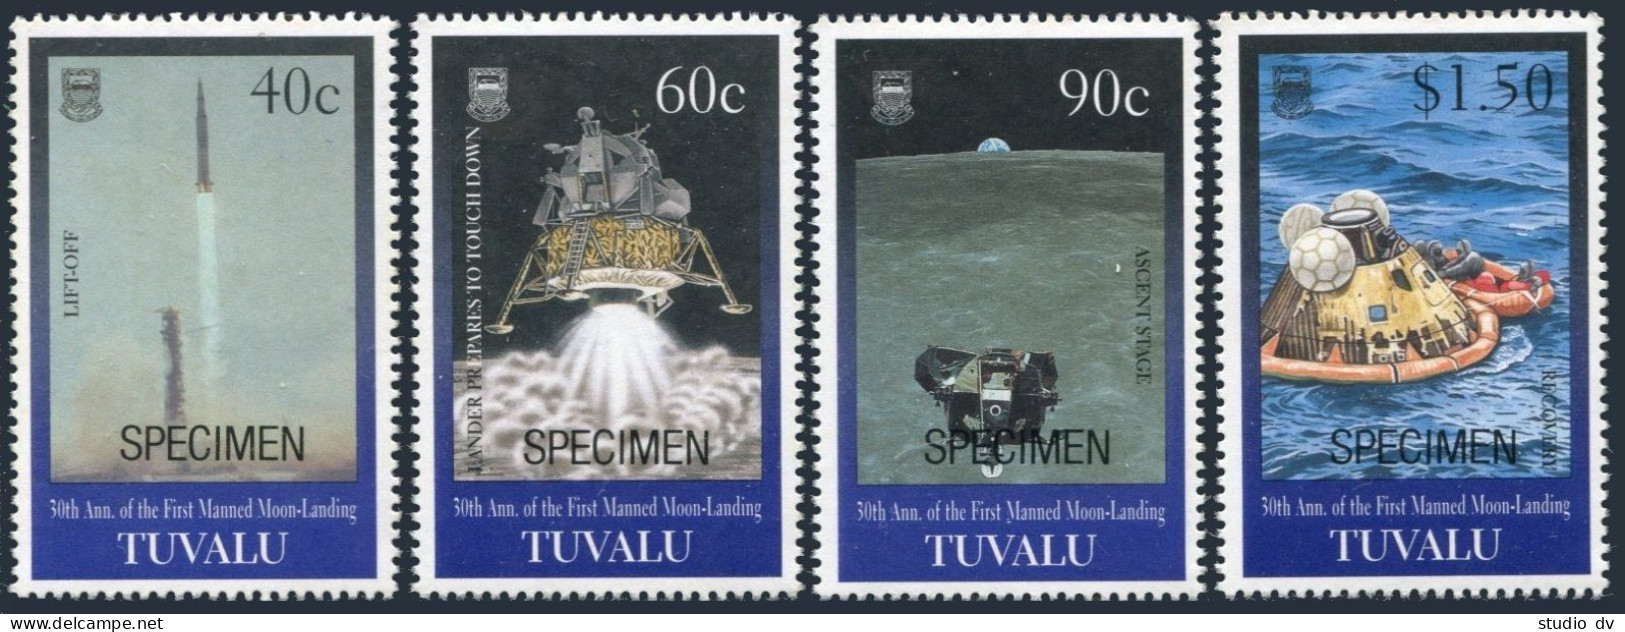 Tuvalu 800-803 SPECIMEN,MNH.Mi 832-835. 1st Manned Moon Landing,30th Ann.1999. - Tuvalu